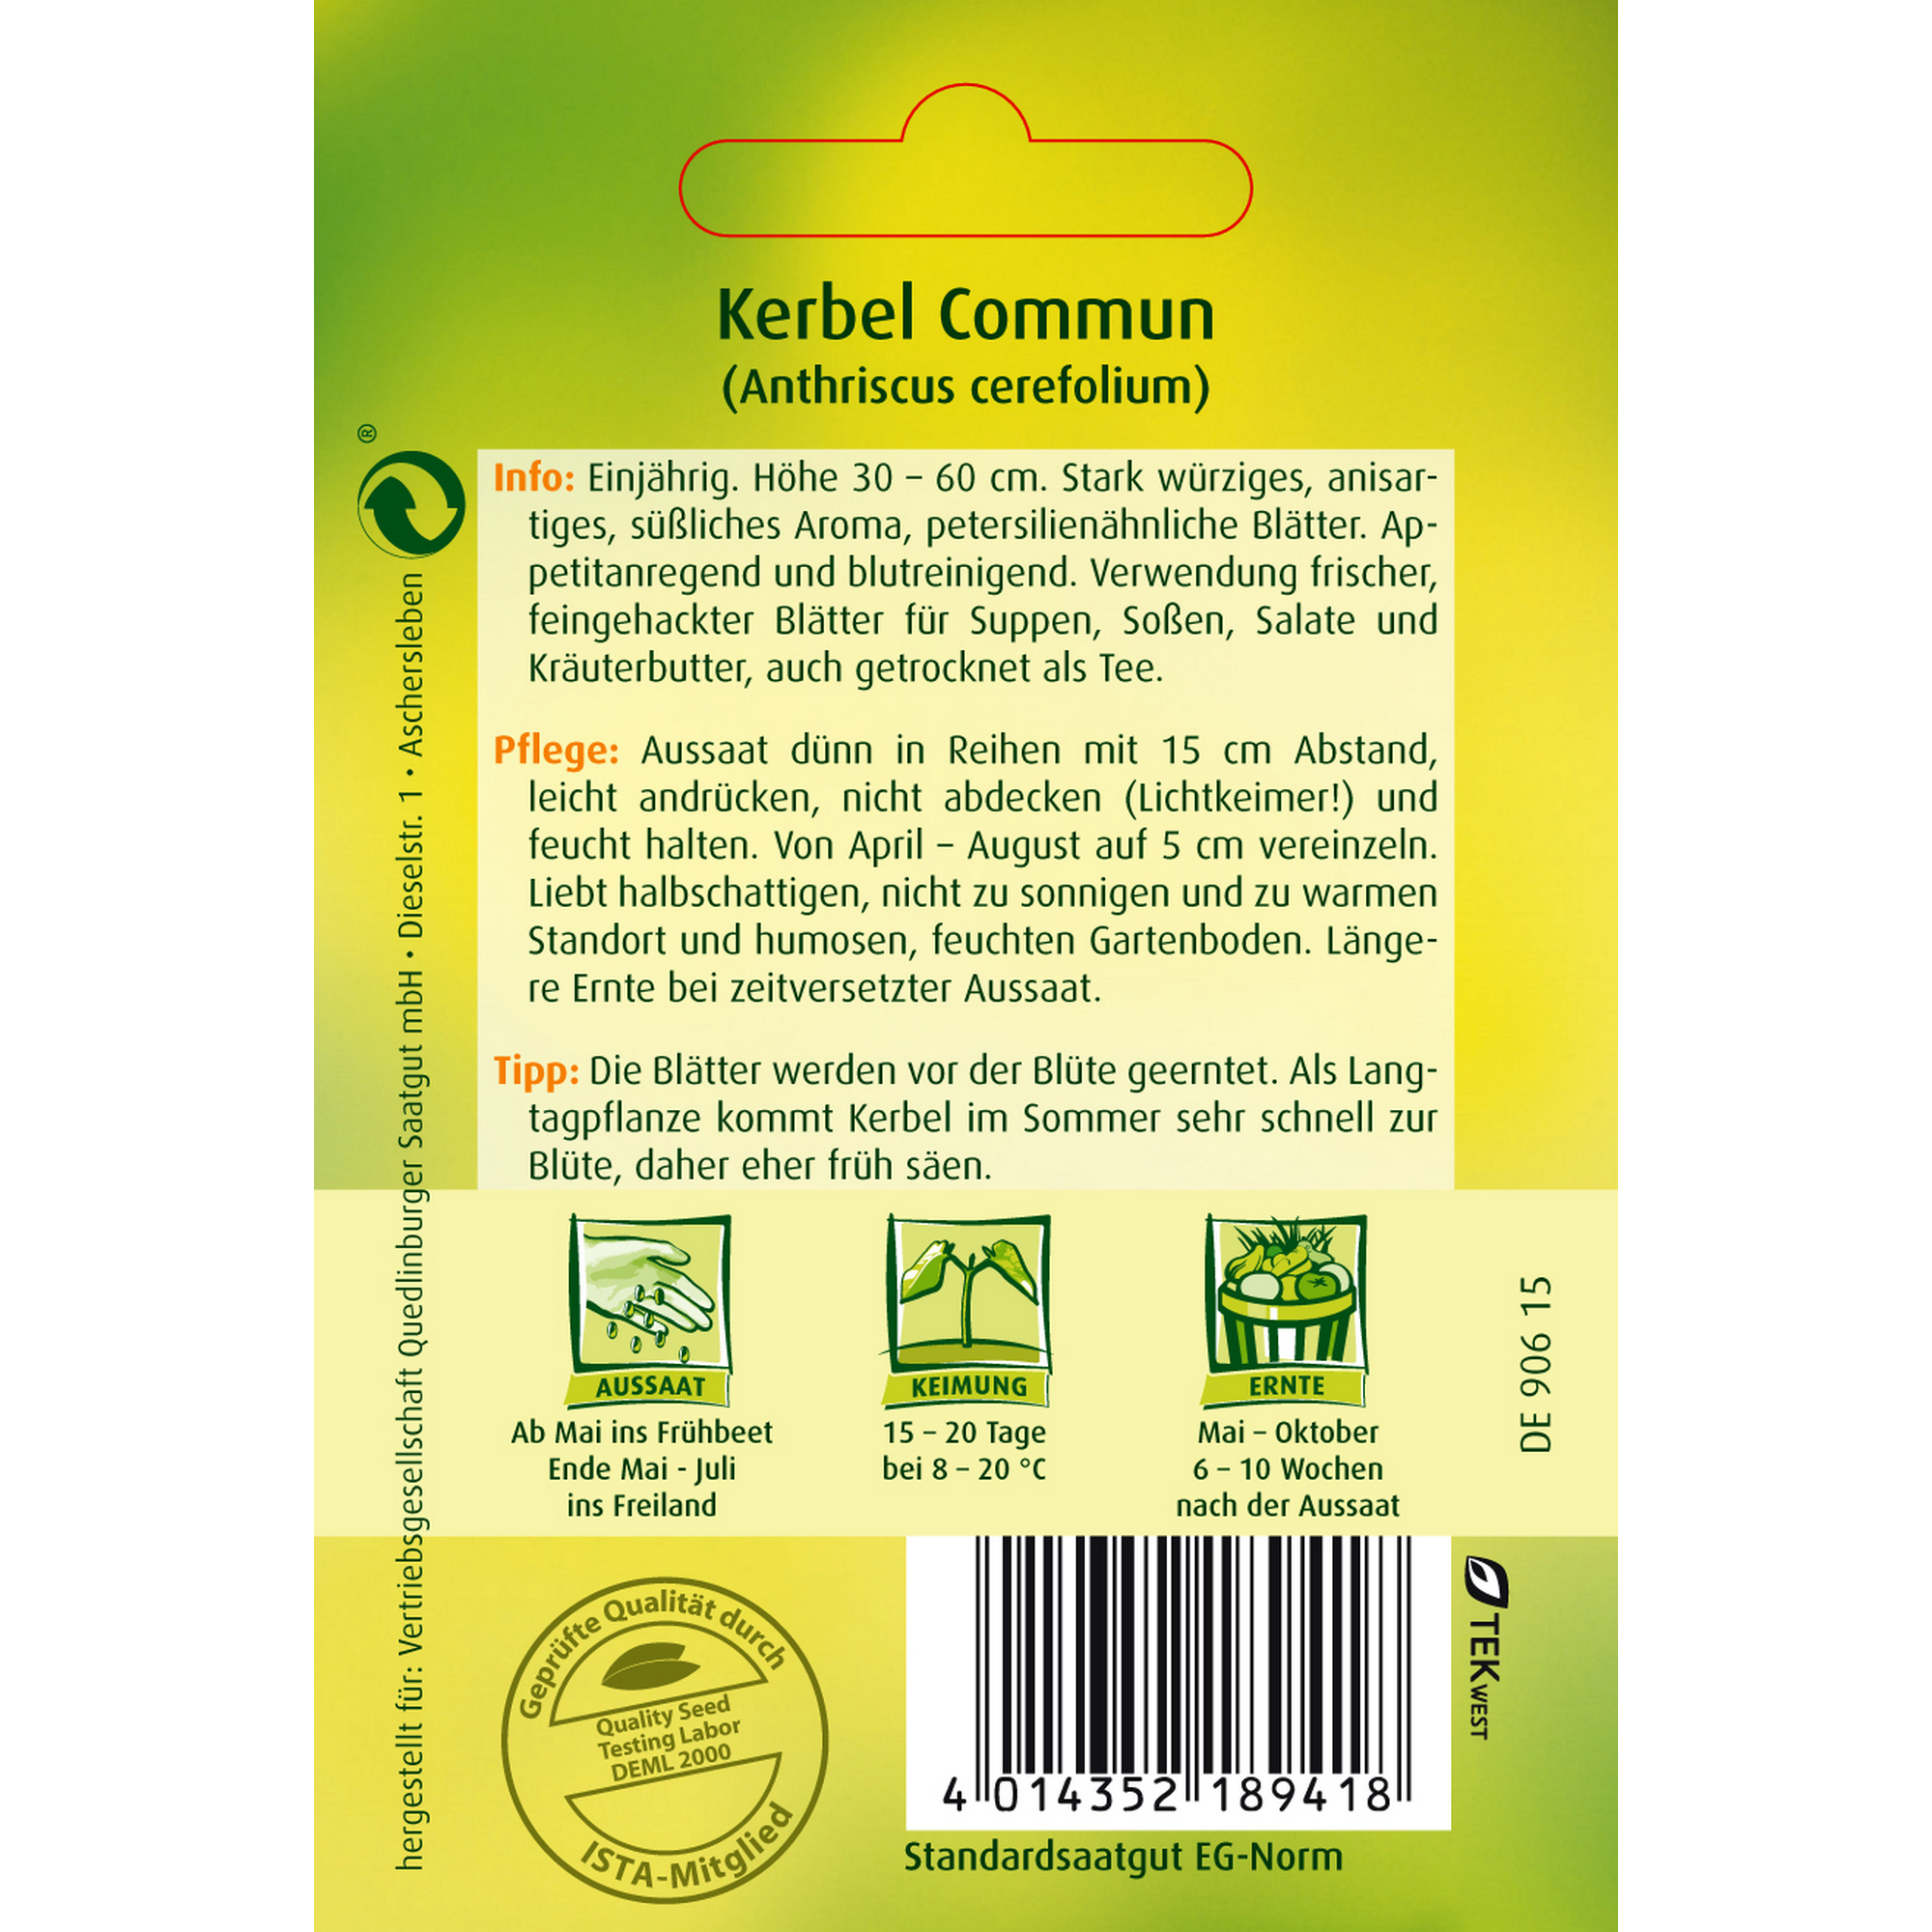 Kerbel 'Commun' + product picture